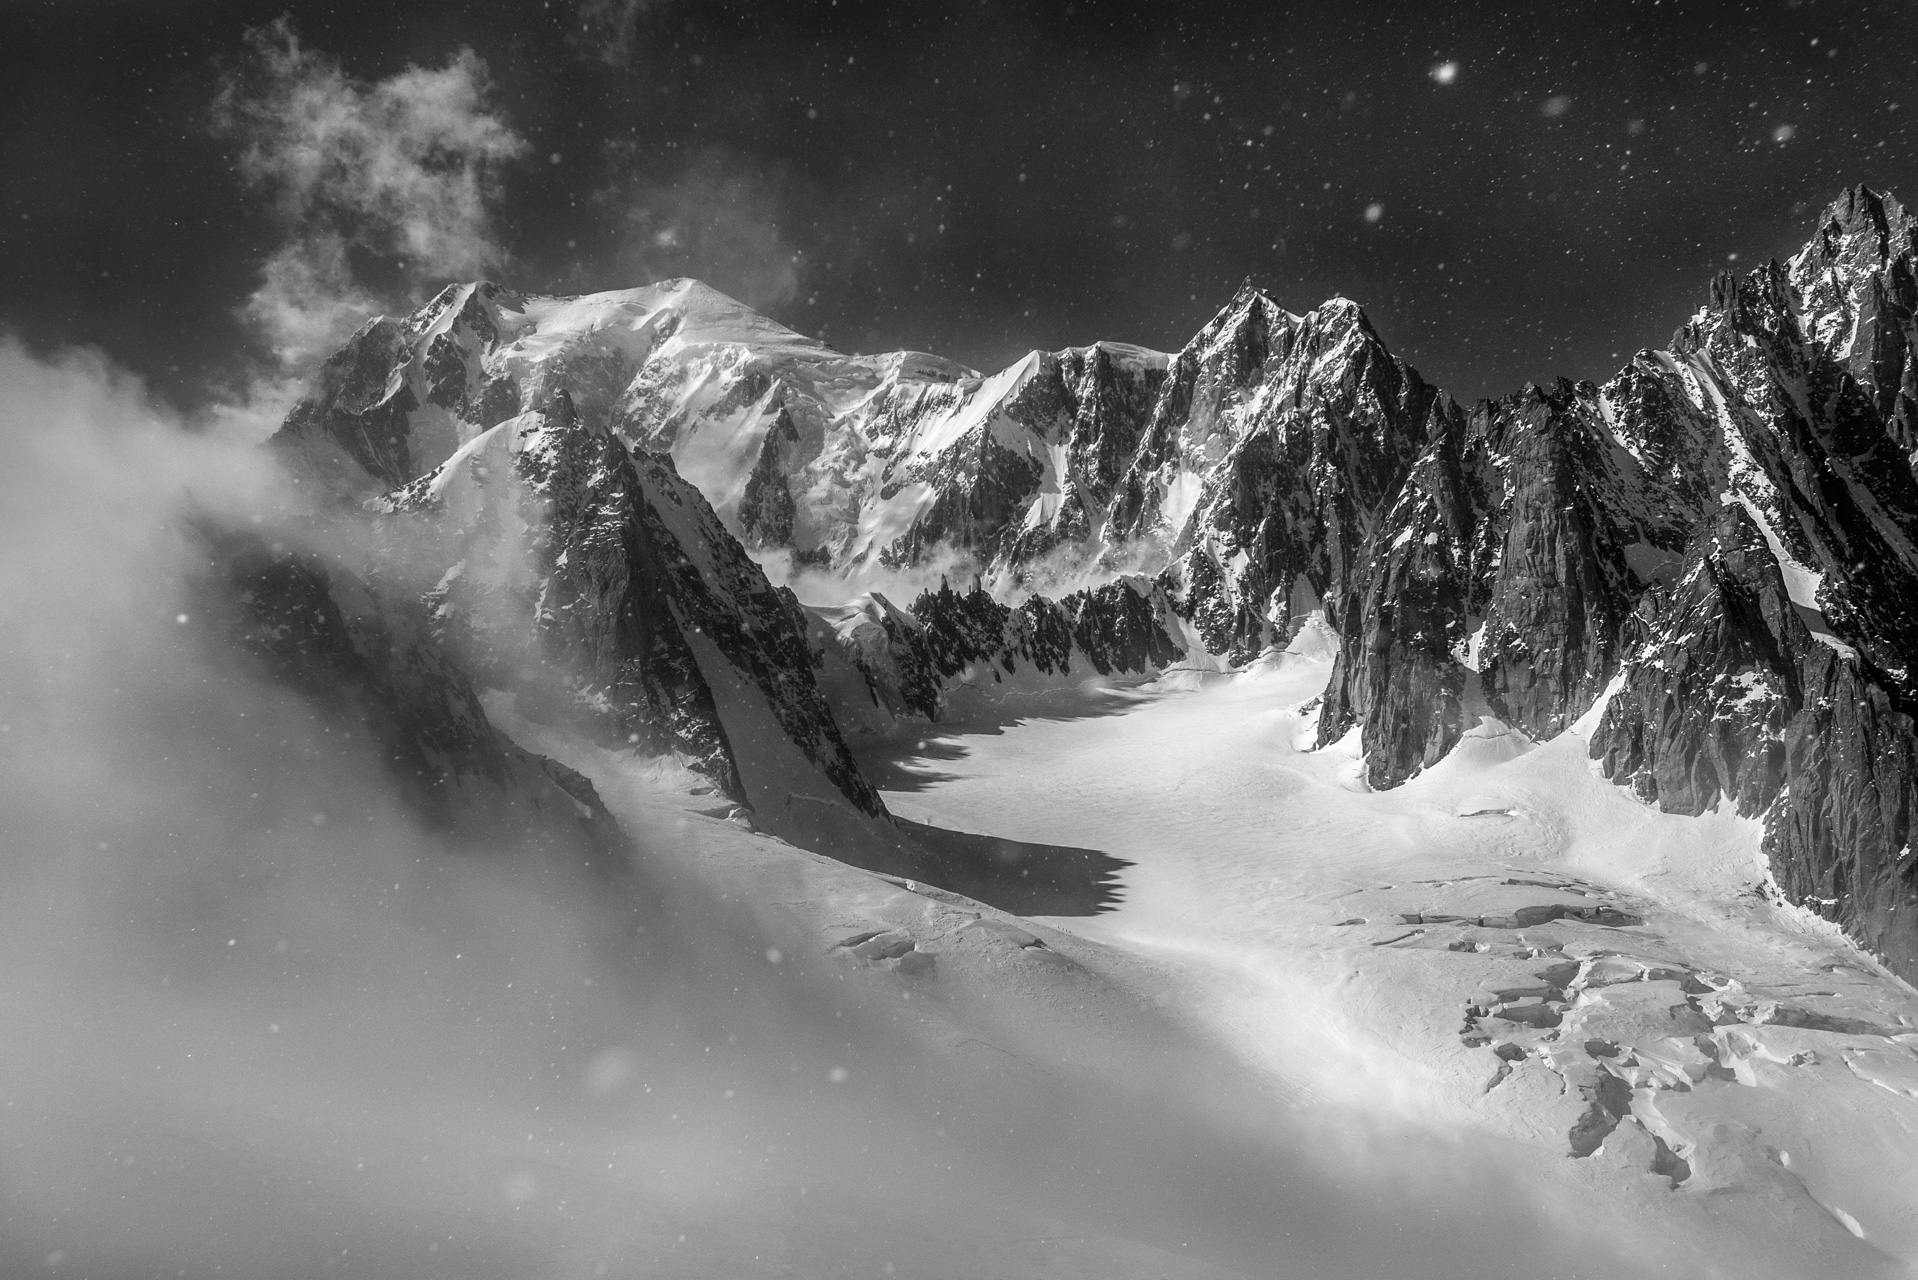 Mont blanc image - Mont Blanc photo - image mont blanc - Brenva slope